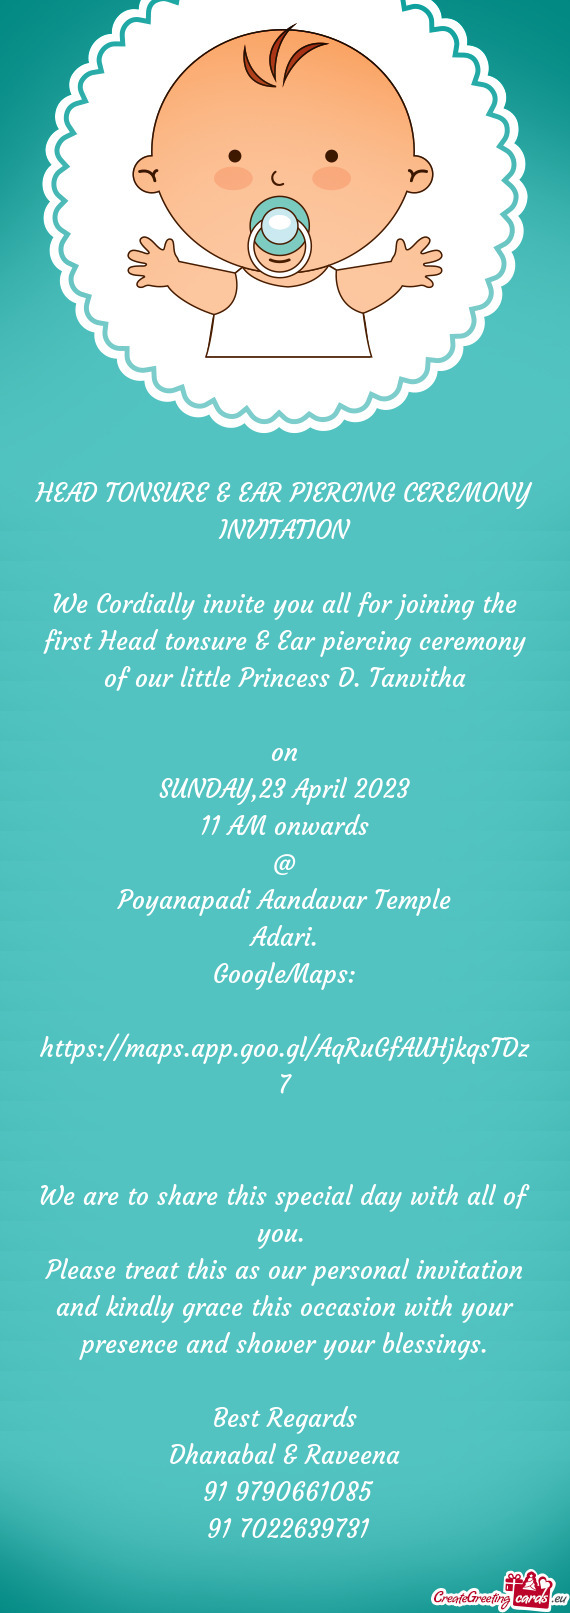 Poyanapadi Aandavar Temple